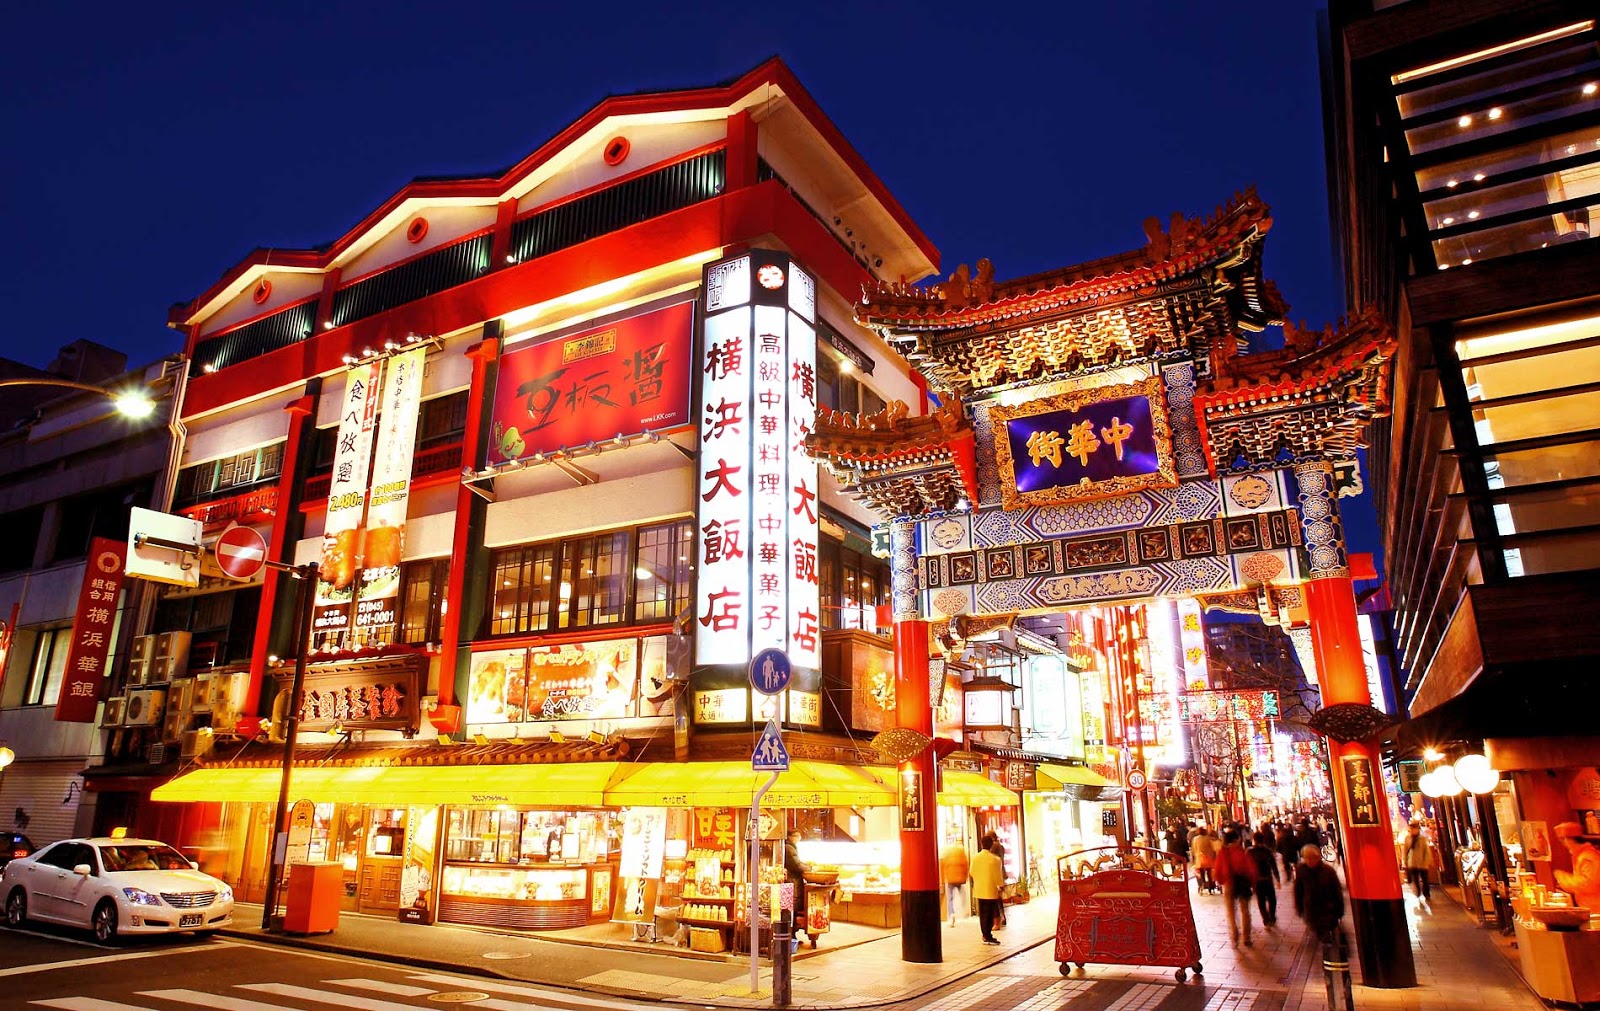 Yusuke Japan Blog: Why don’t you visit Yokohama Chinatown?